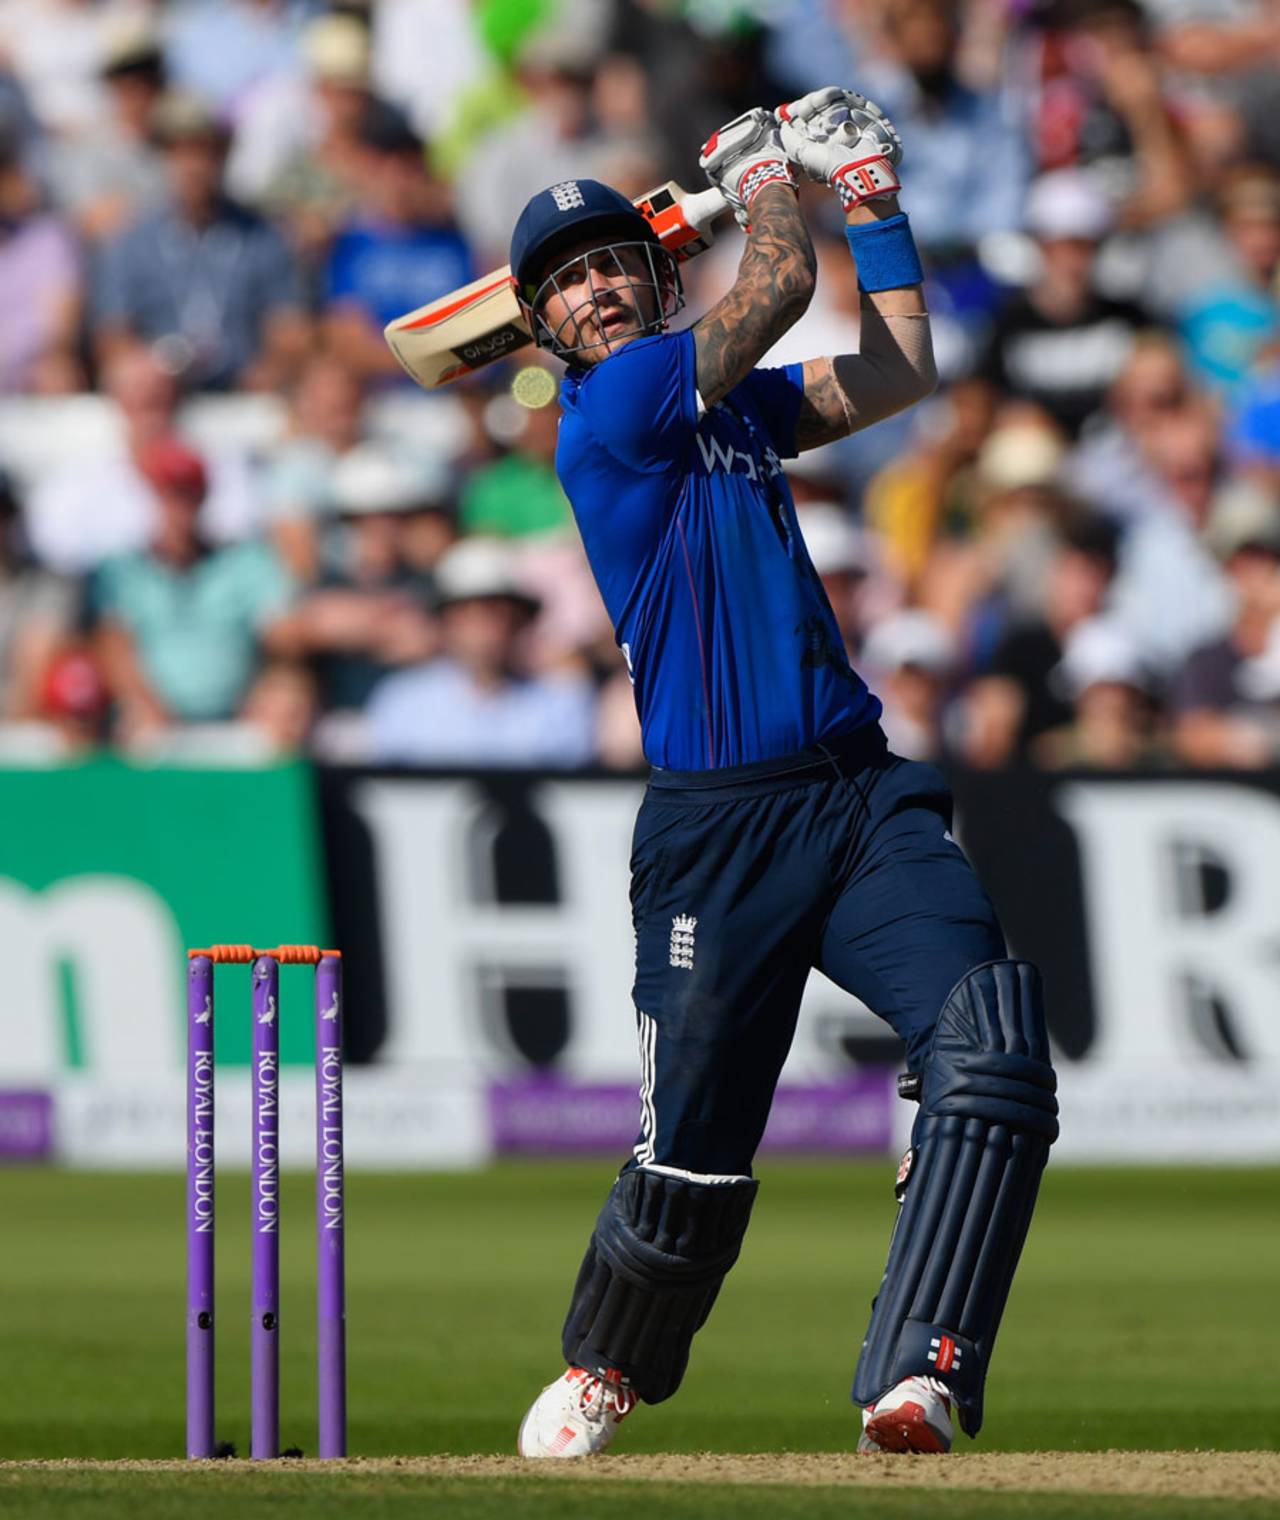 Alex Hales swings hard on his way to a hundred, England v Pakistan, 3rd ODI, Trent Bridge, August 30, 2016